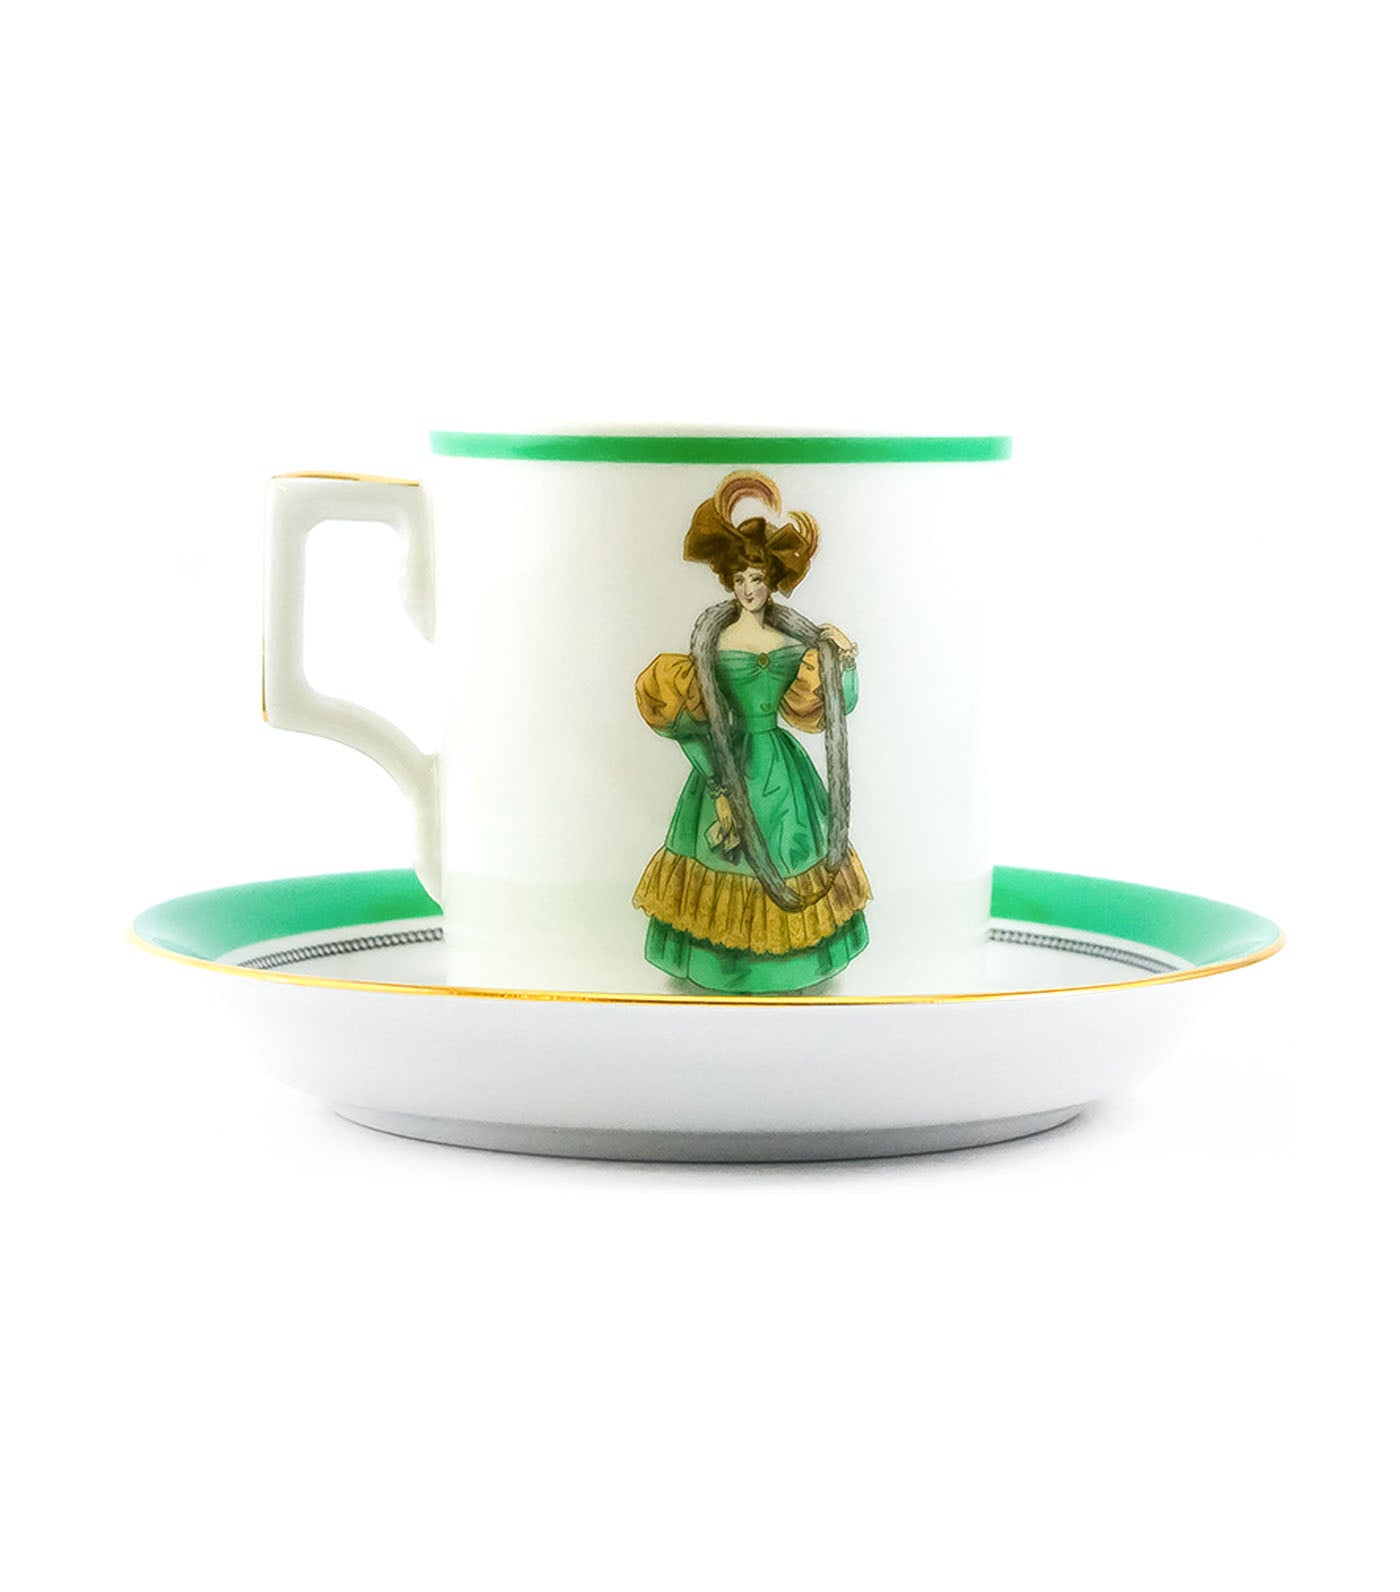 imperial porcelain modes de paris 1830 teacup and saucer heraldic